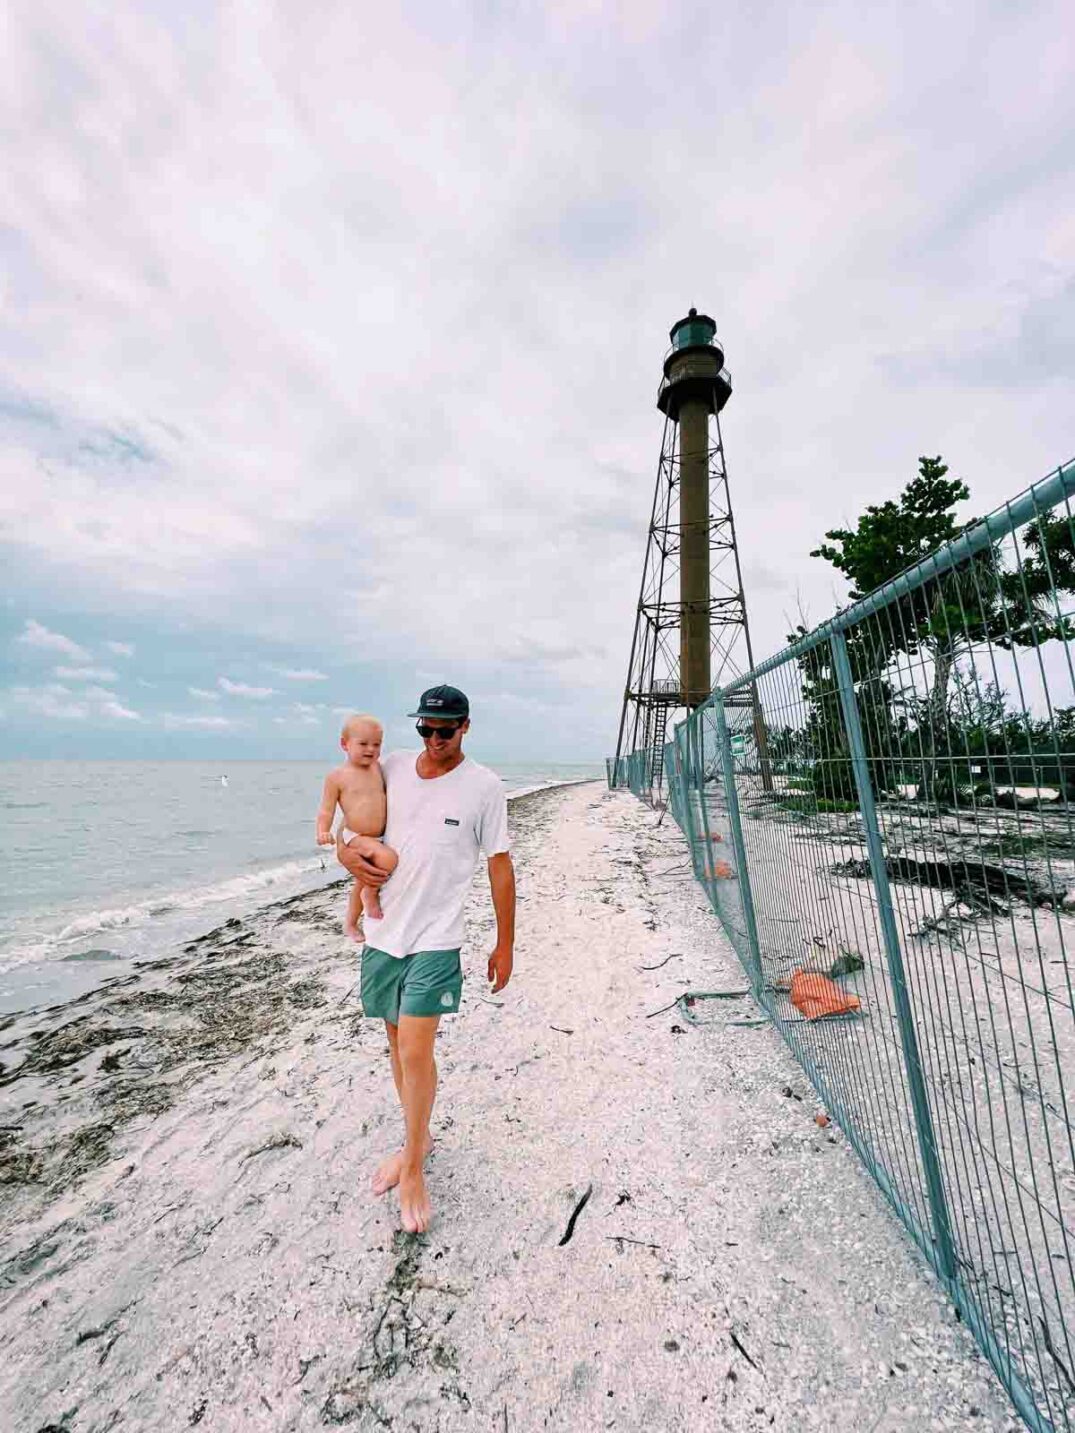 jeremy johnston and jetty johnston walking along the sanibel lighthouse beach after hurricane ian.